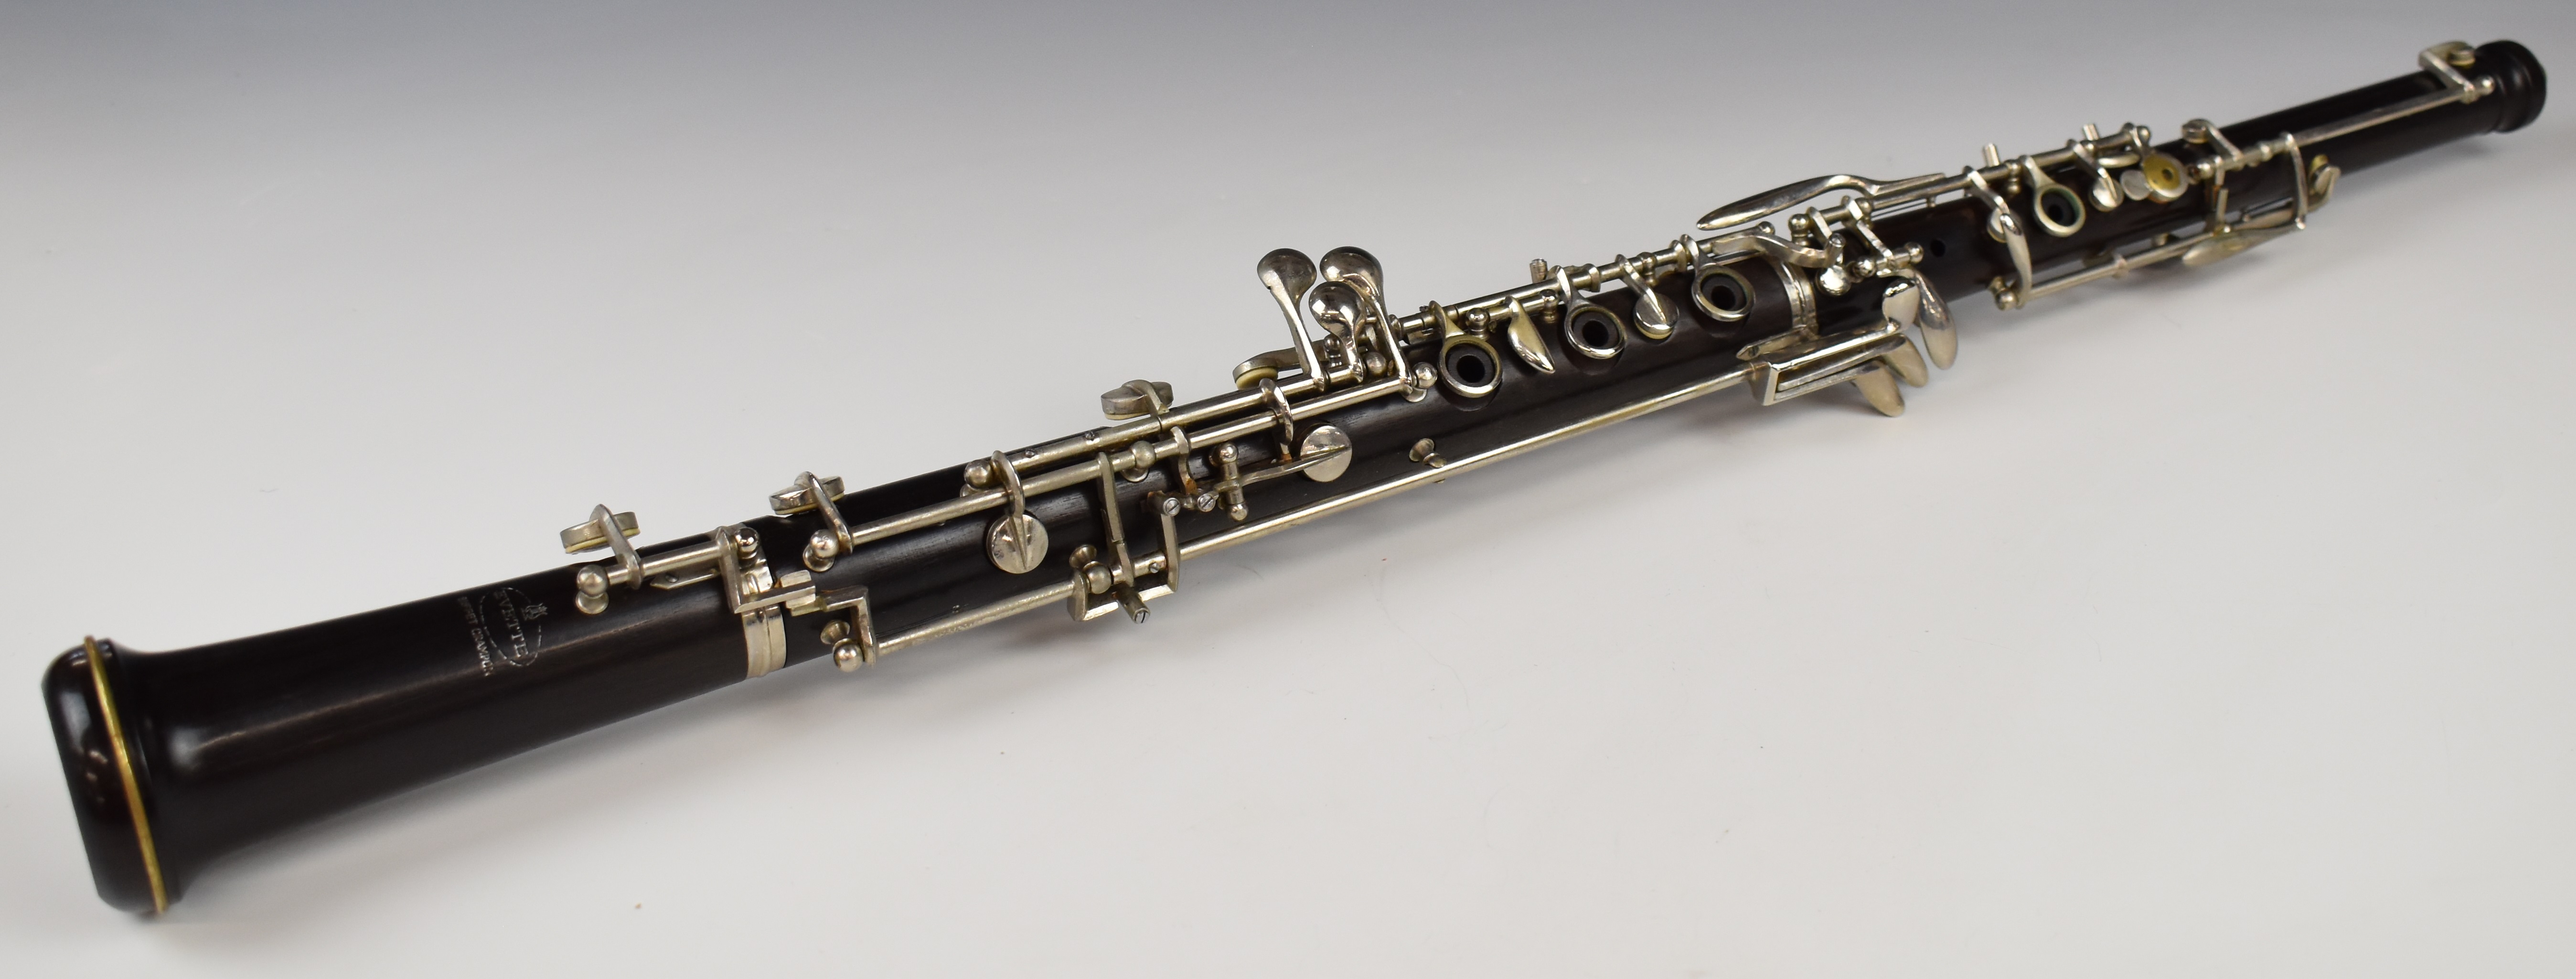 Evette 1970s wooden oboe, in original case. - Image 2 of 4